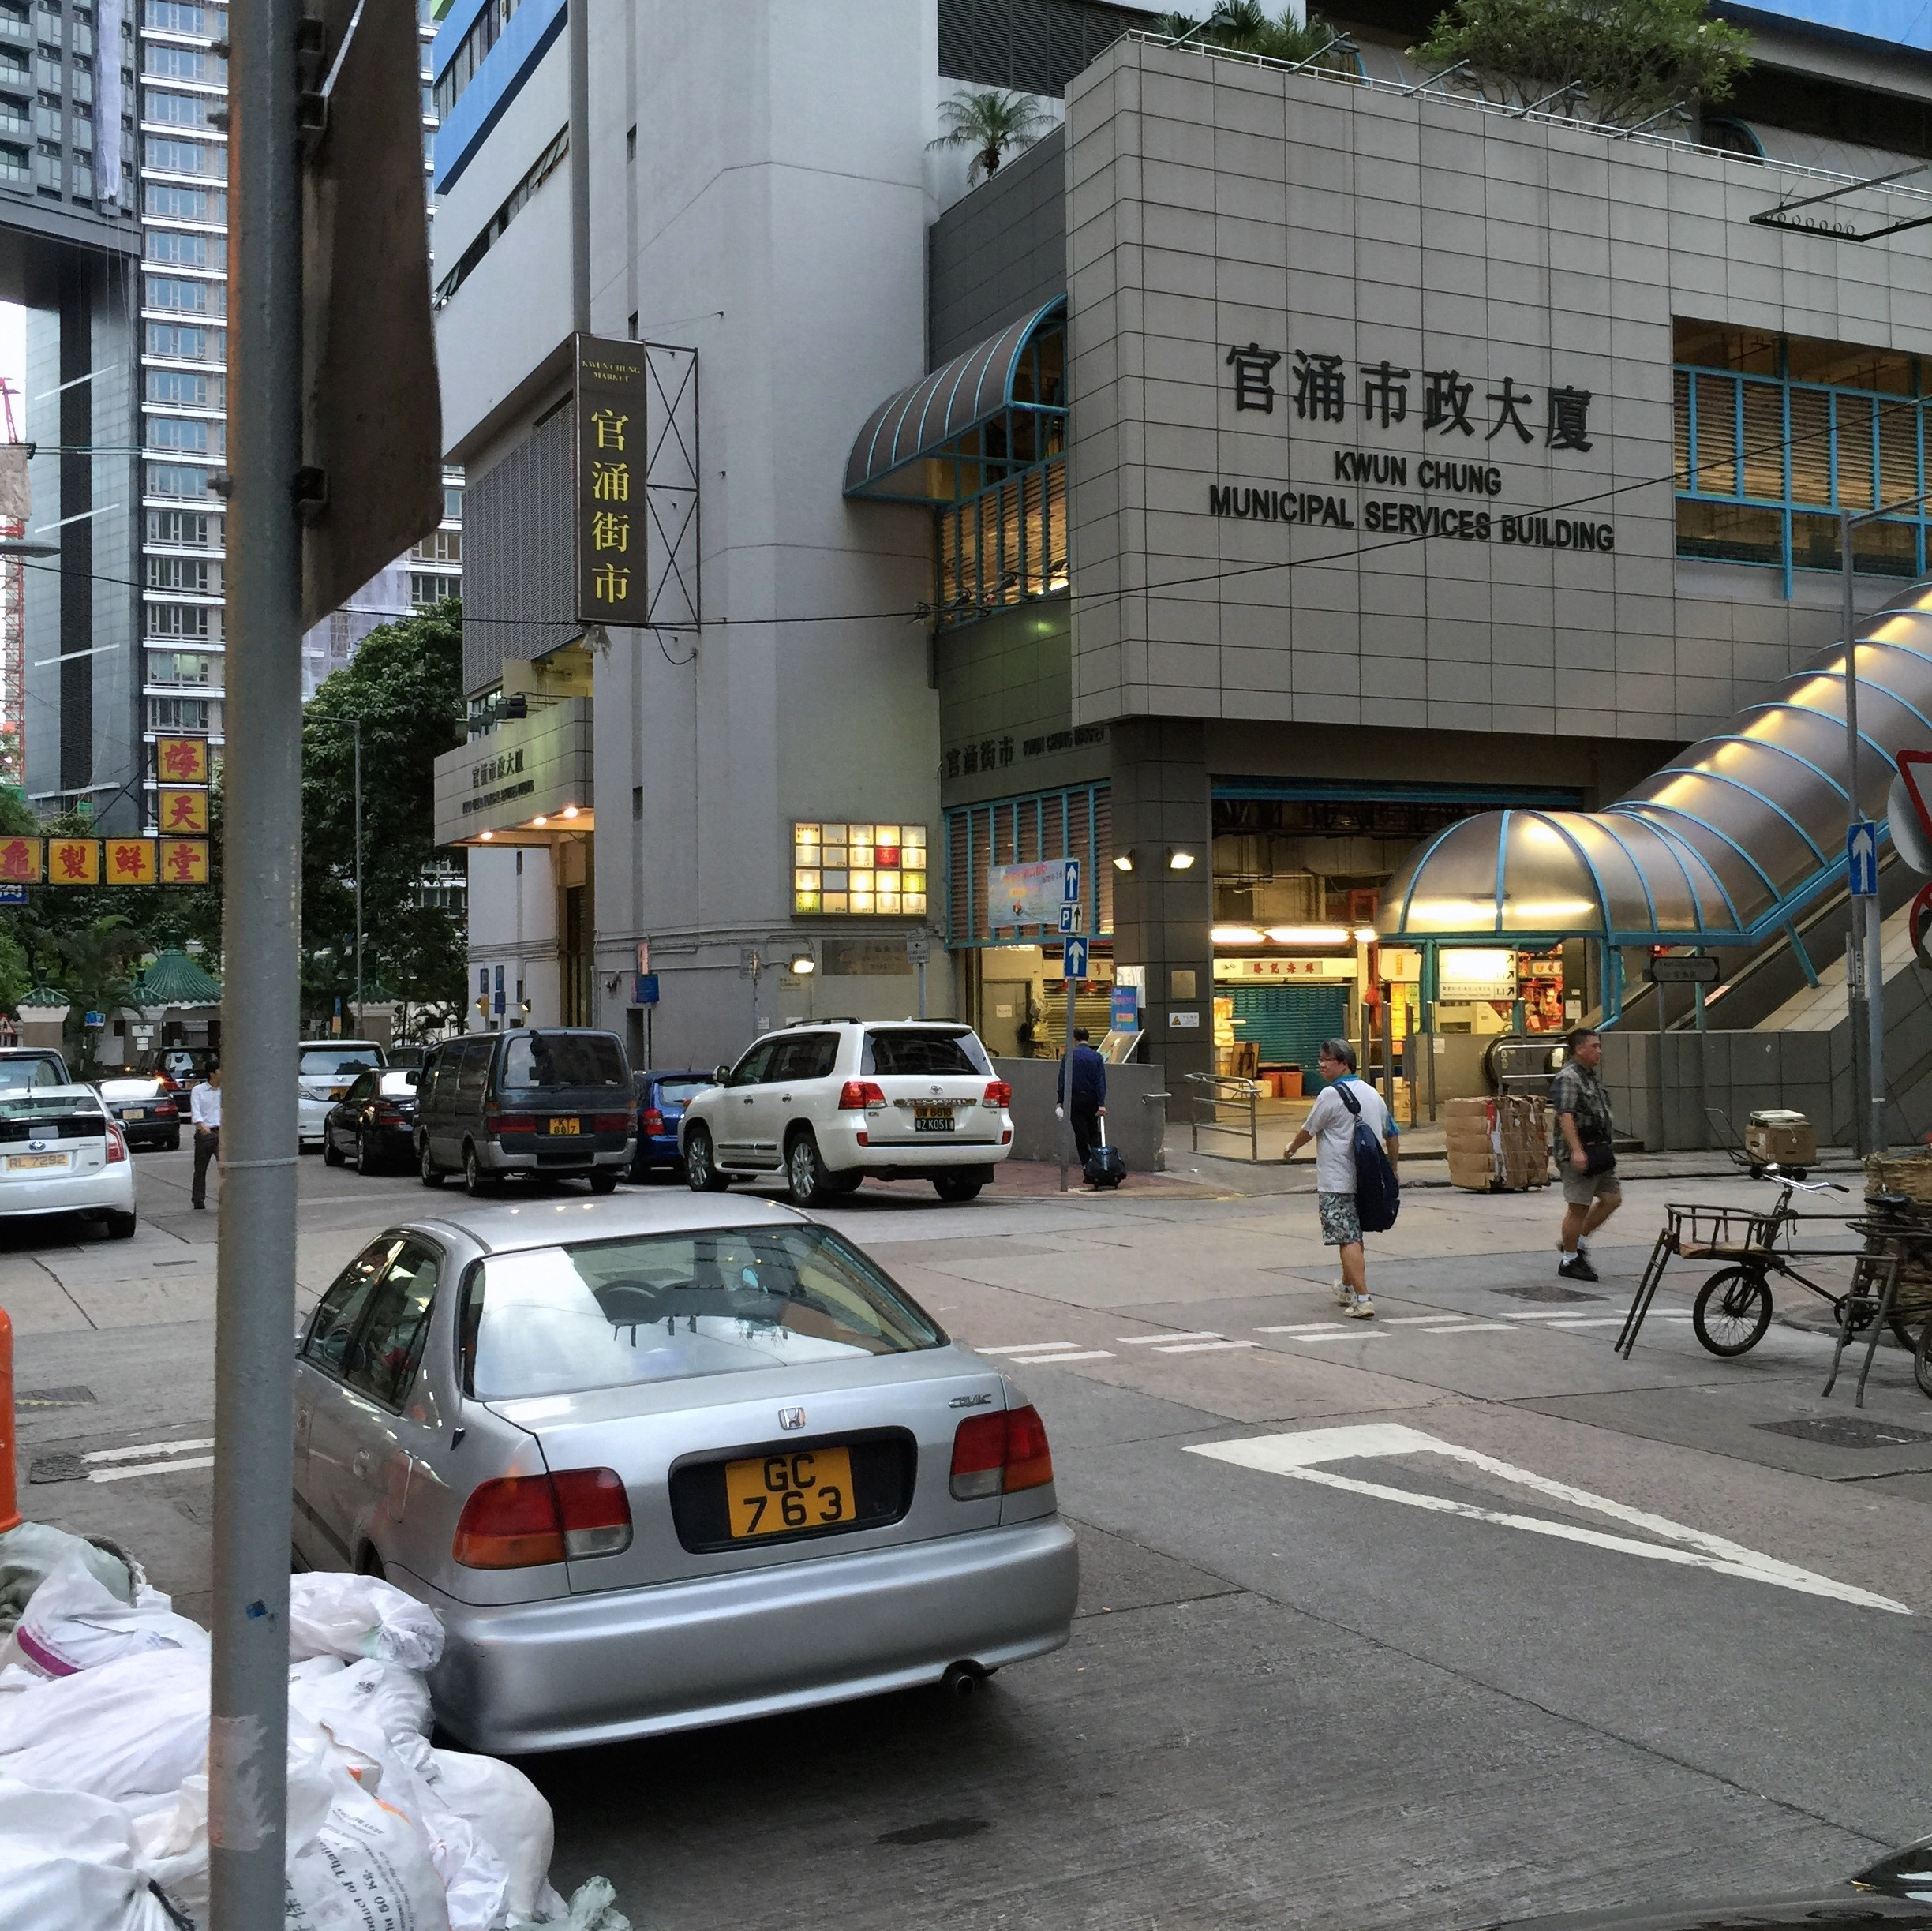 Hong Kong Hello Kitty Restaurant - past through Municipal Services Building